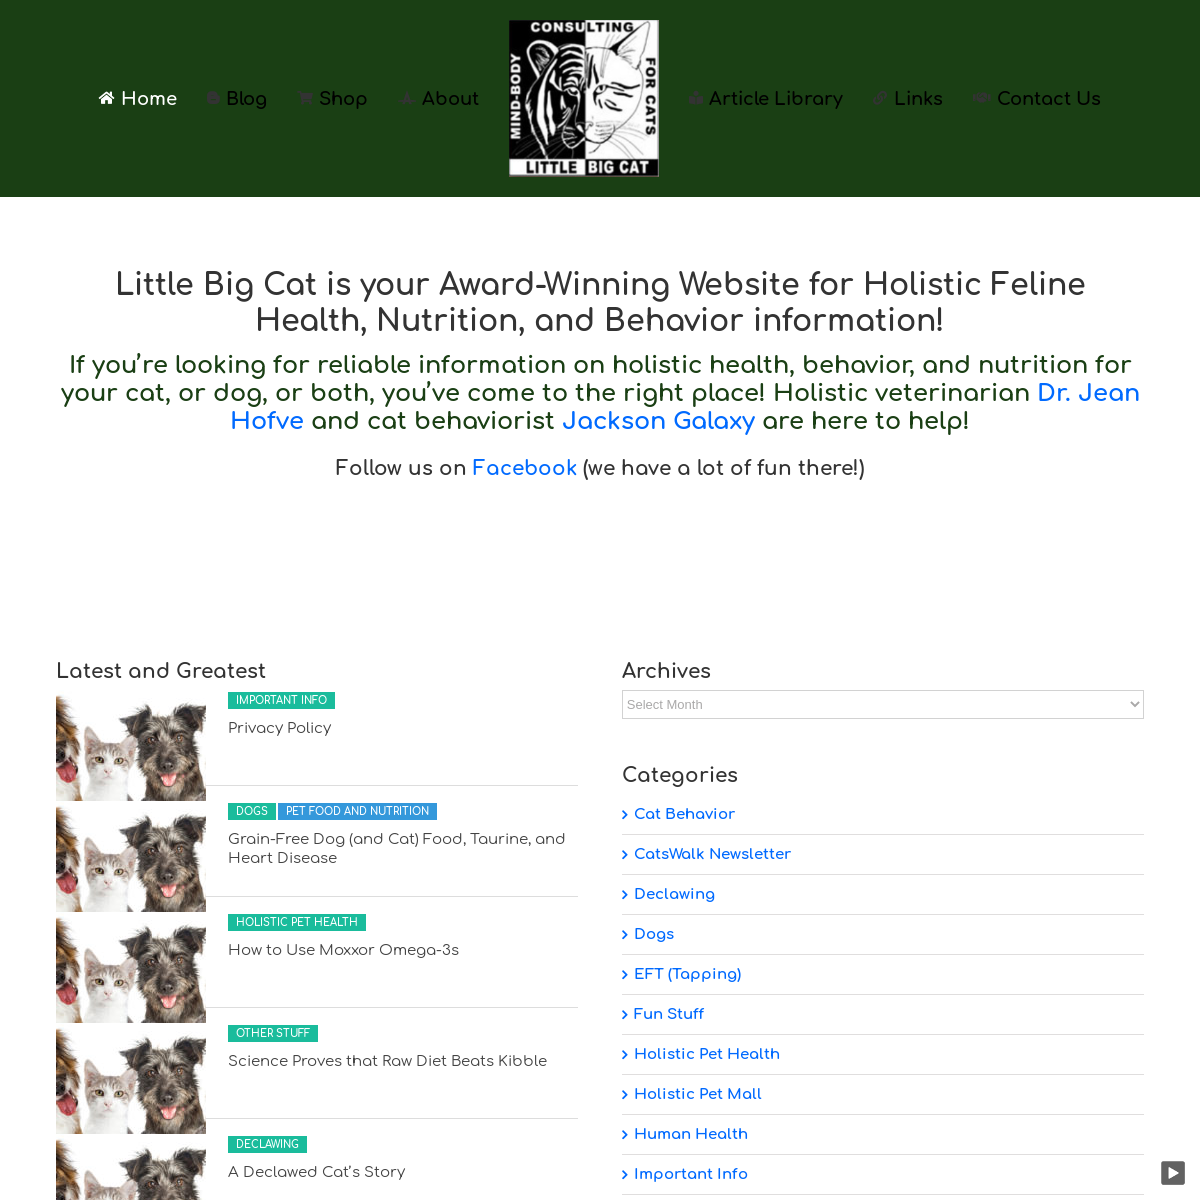 A complete backup of littlebigcat.com